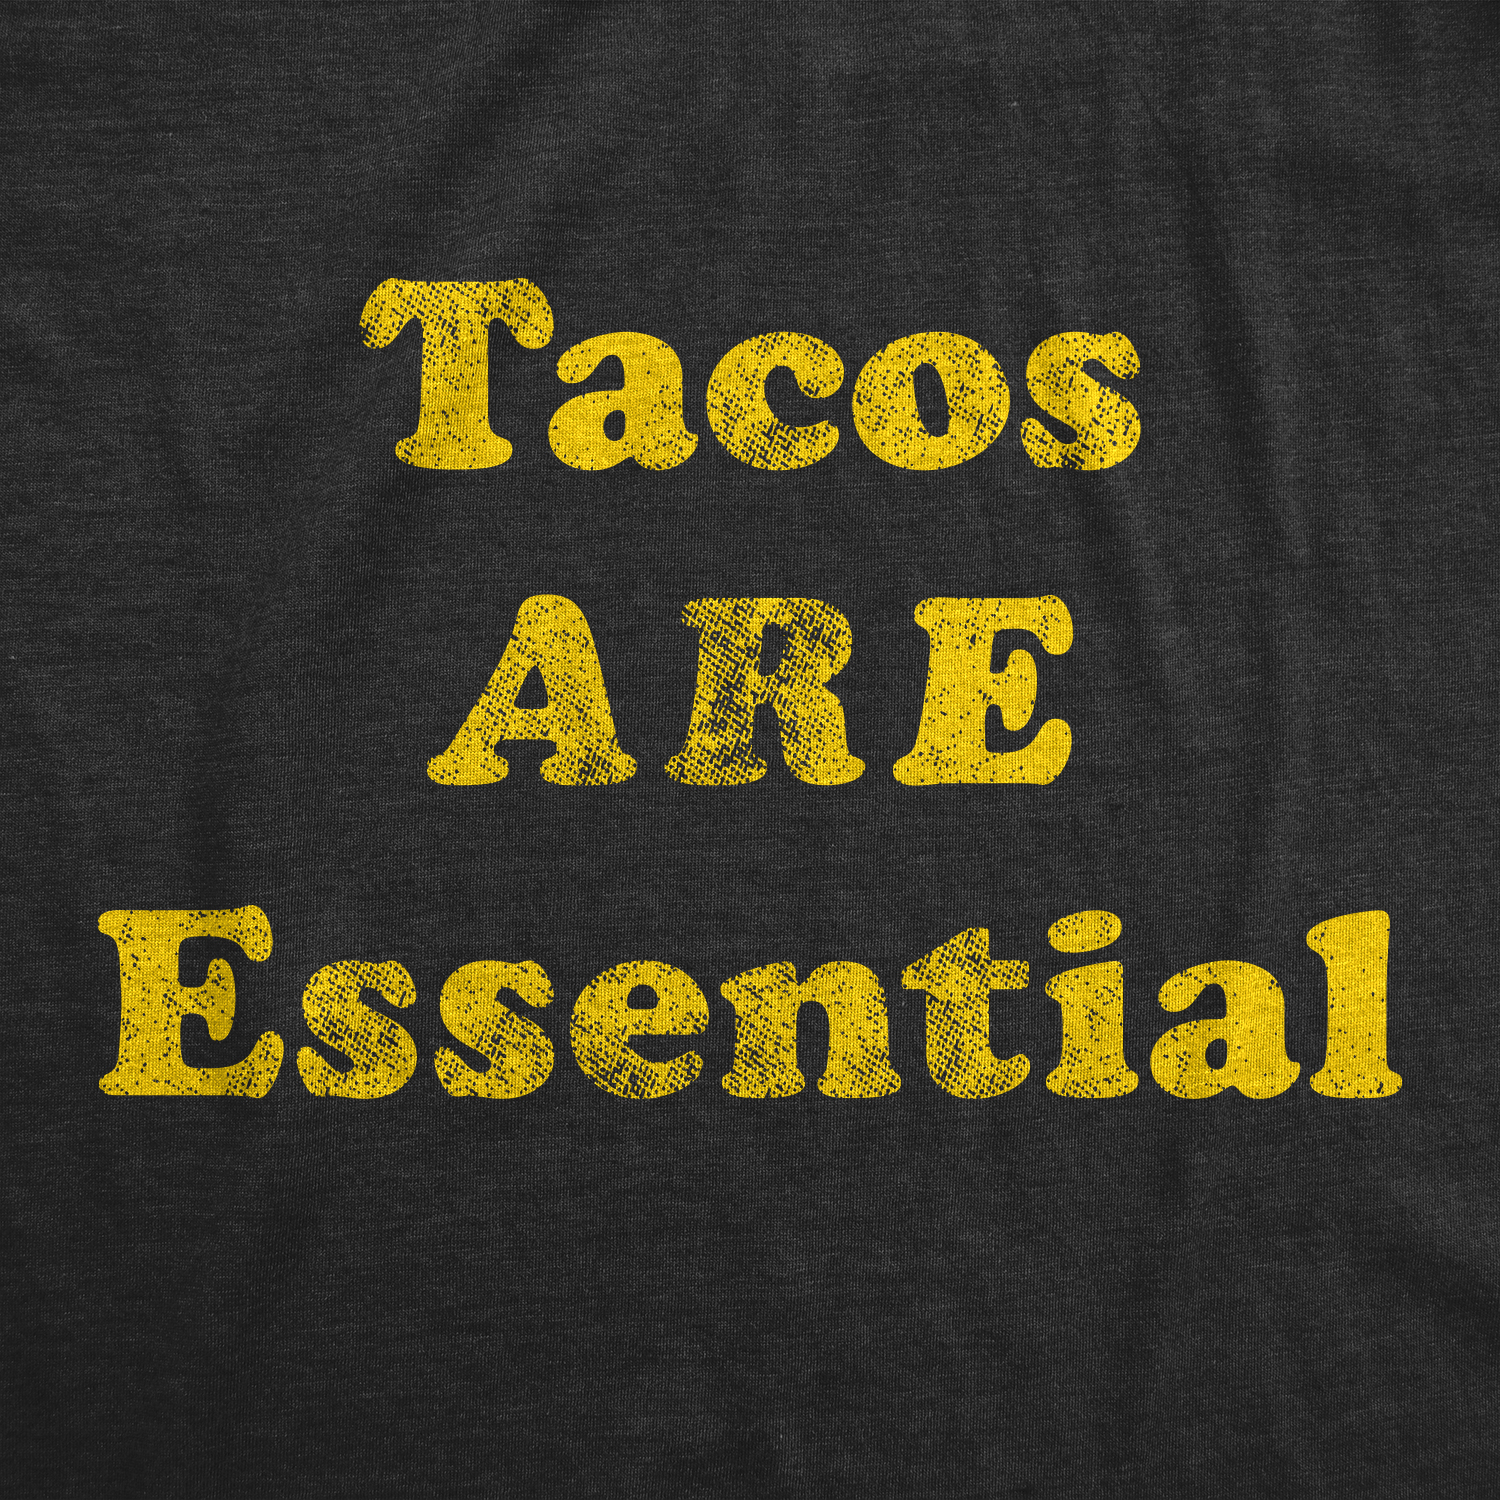 Crazy Dog Tshirts Mens Tacos Are Essential Tshirt Funny Taco Tuesday Novelty Tee